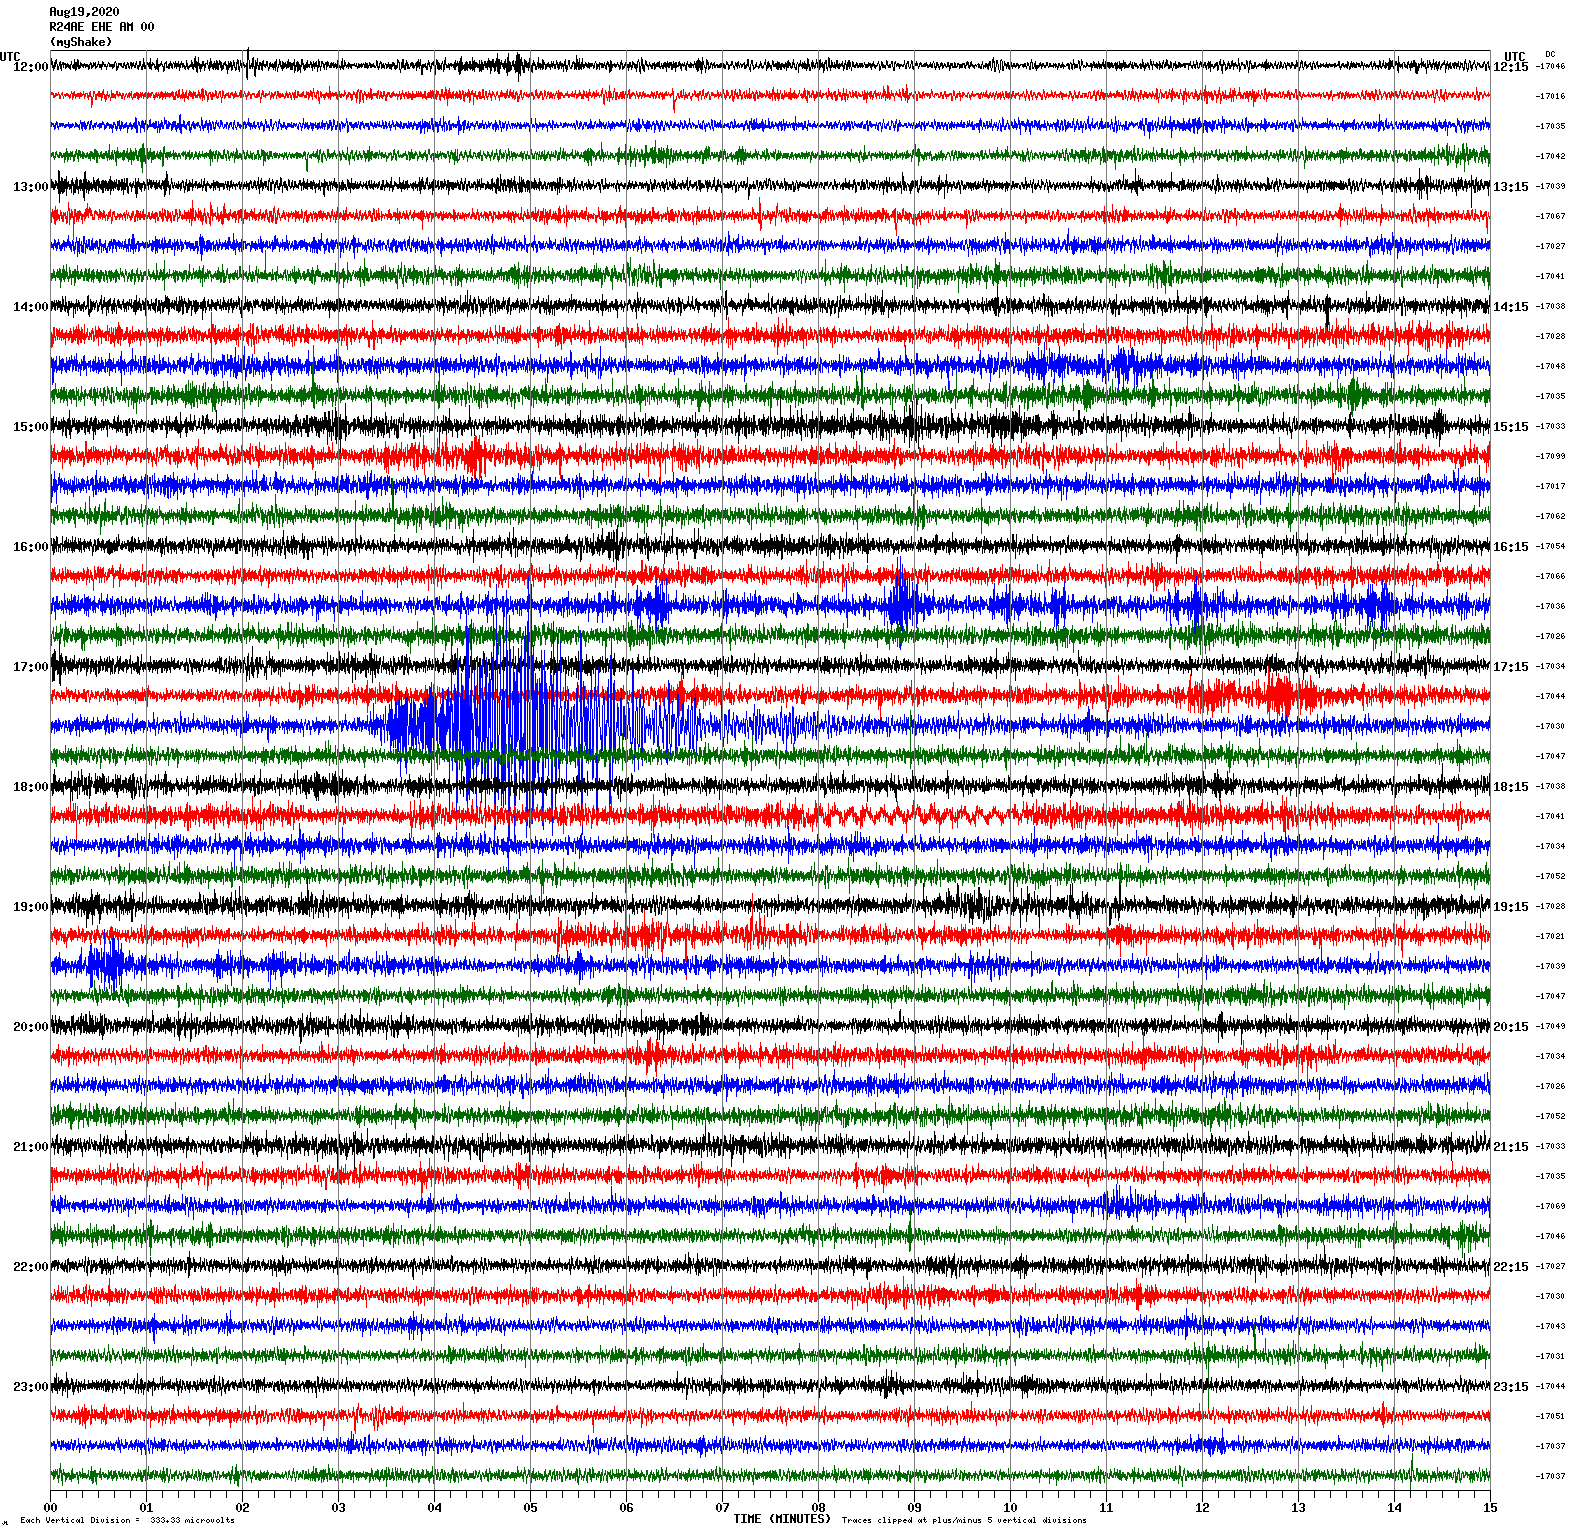 /seismic-data/R24AE/R24AE_EHE_AM_00.2020081912.gif